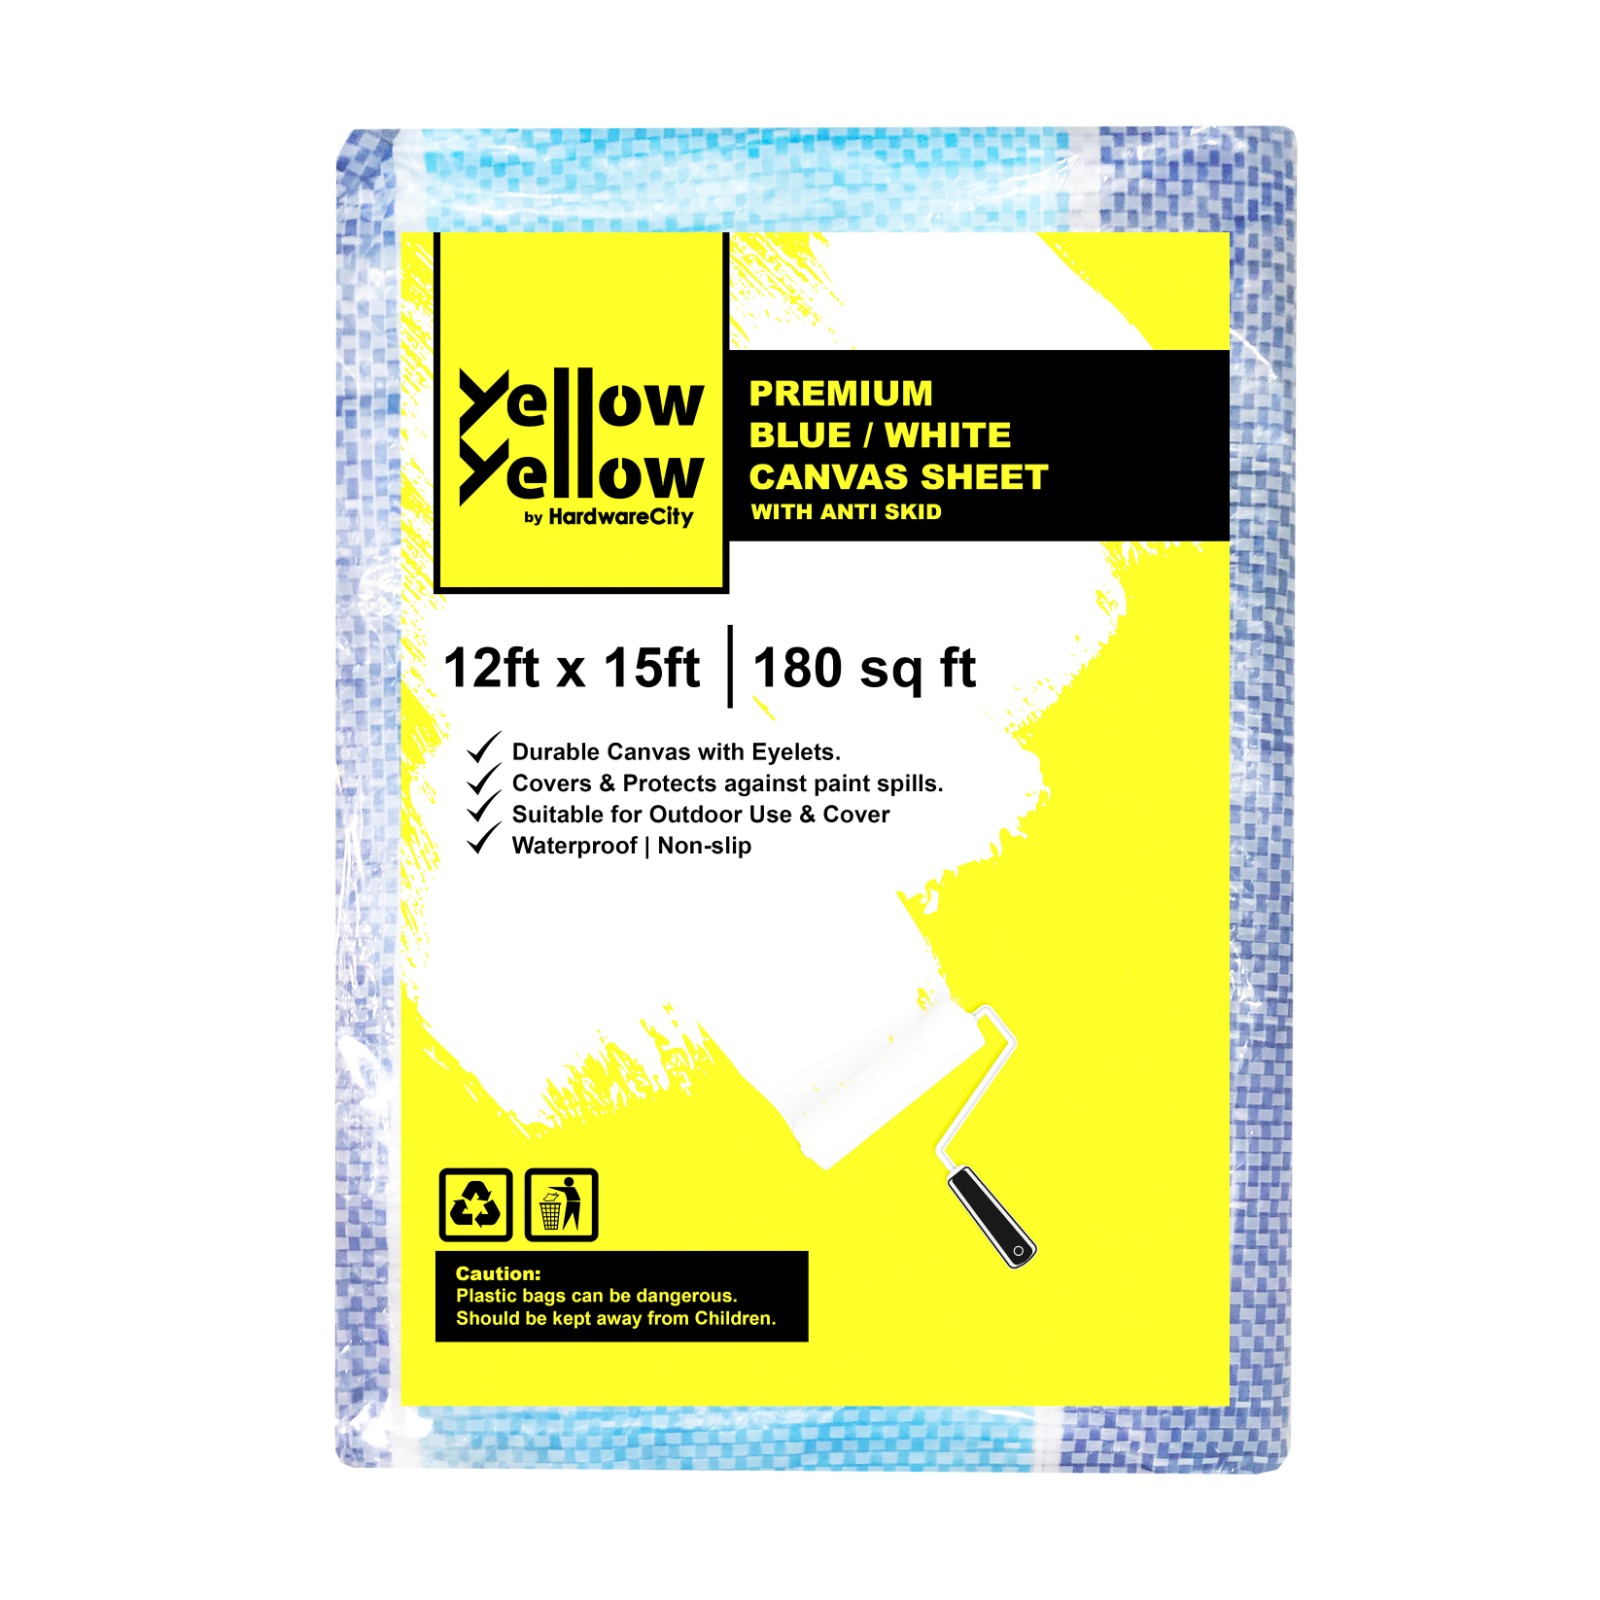 YellowYellow 12FT x 15FT Premium Canvas Sheet Blue/White With Anti-Skid